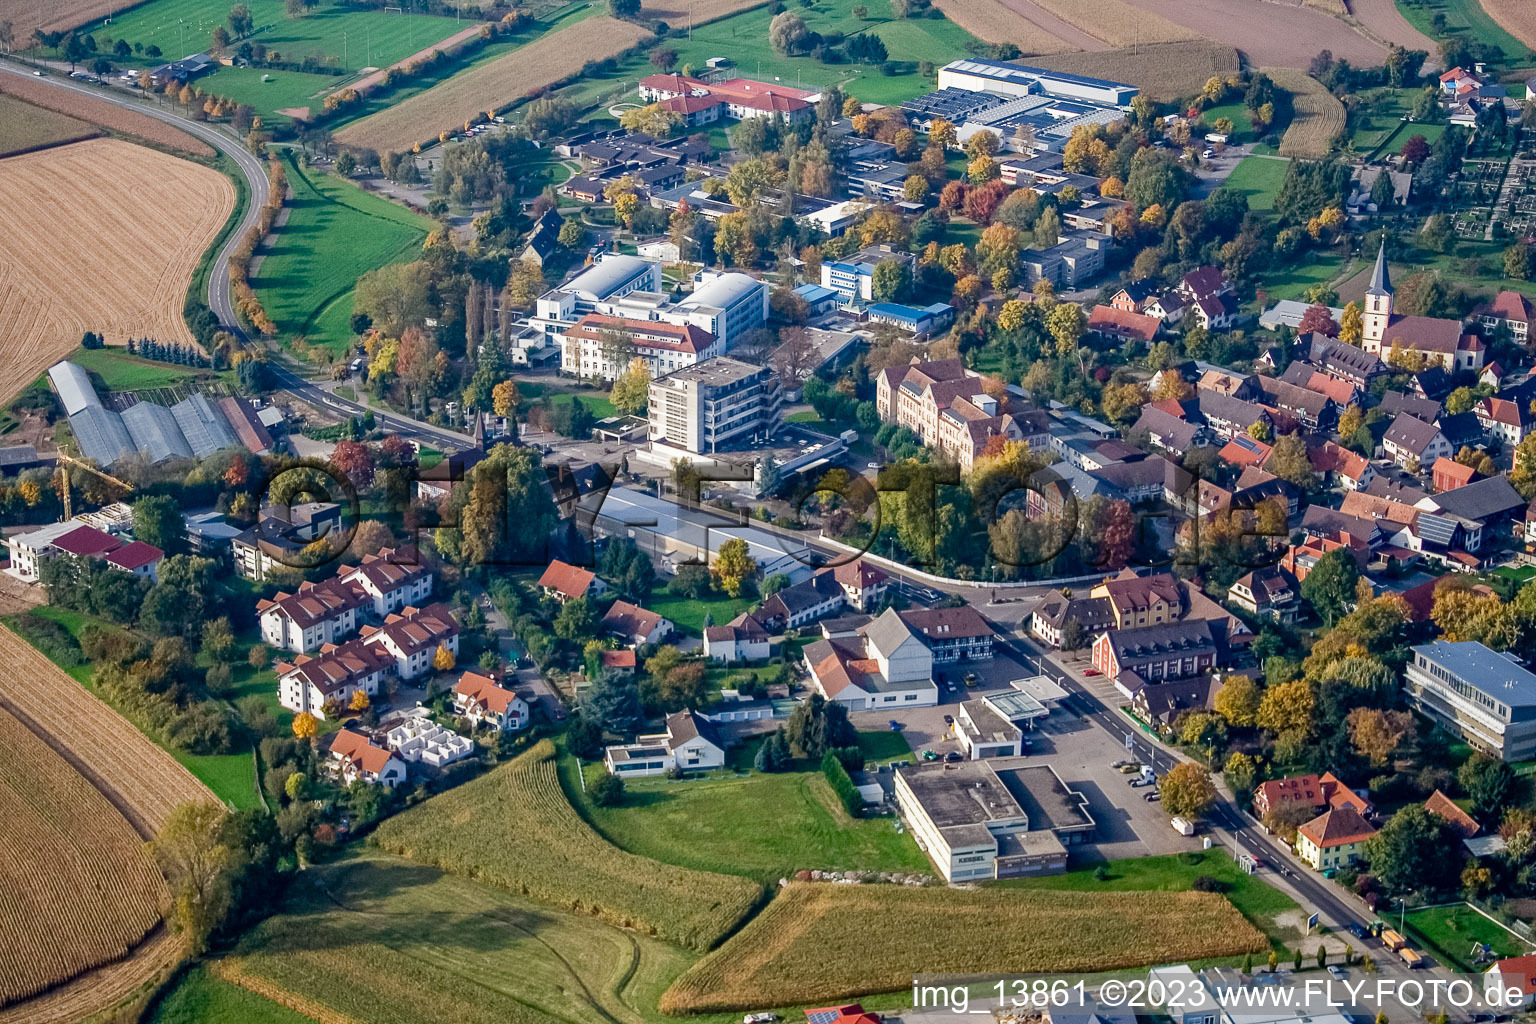 Aerial view of District Kork in Kehl in the state Baden-Wuerttemberg, Germany